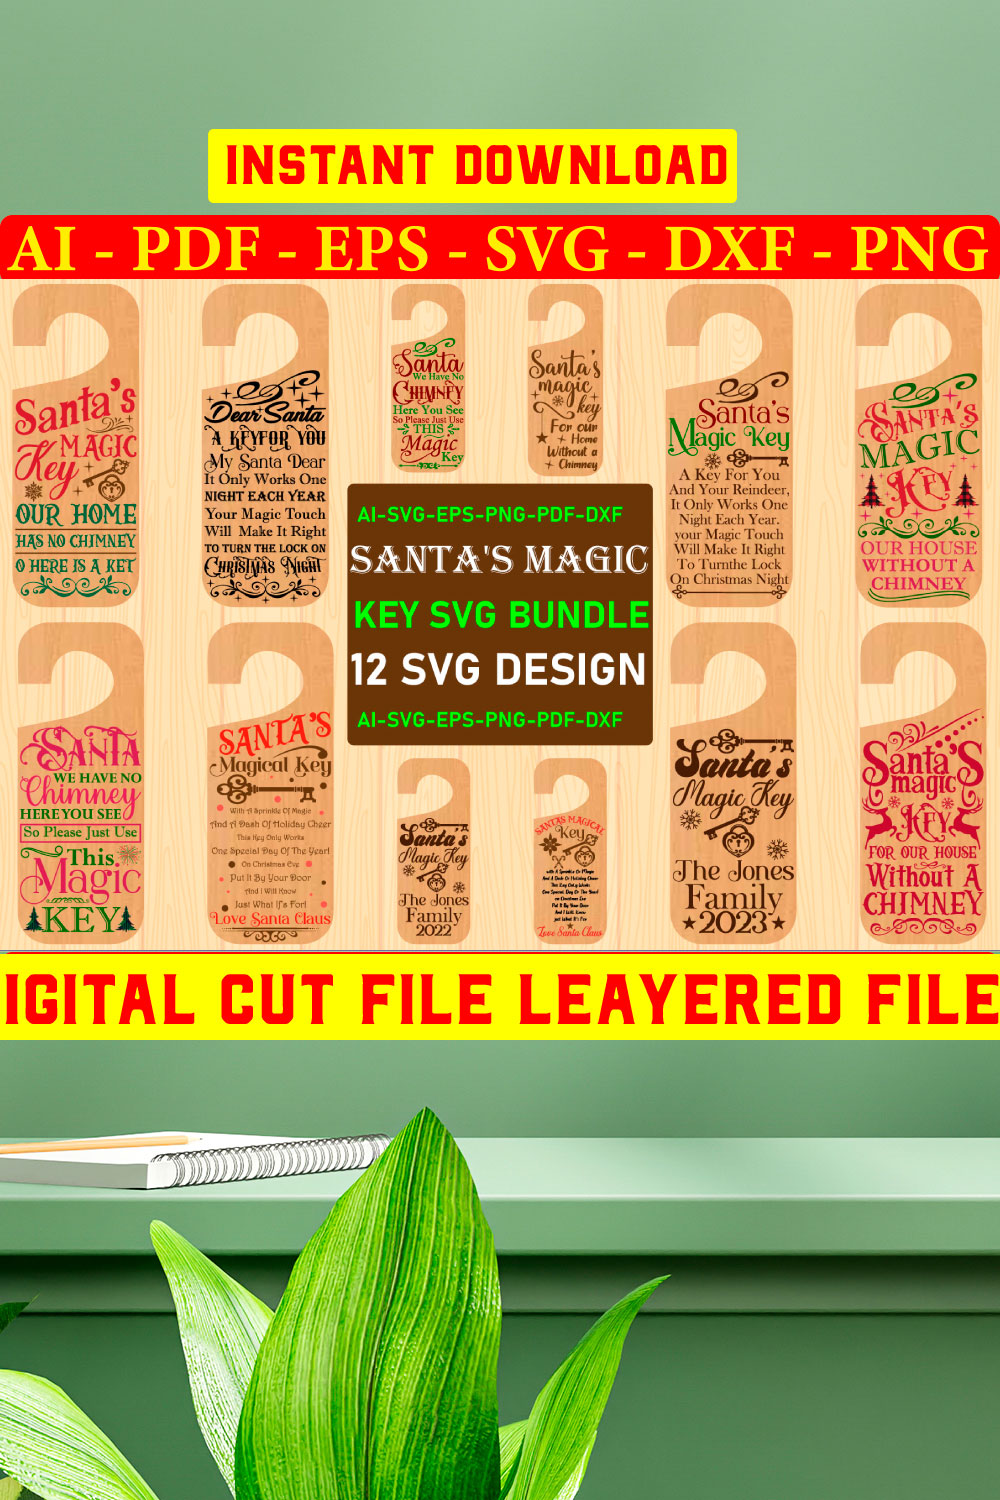 Santa's Magic Key SVG Bundle pinterest preview image.